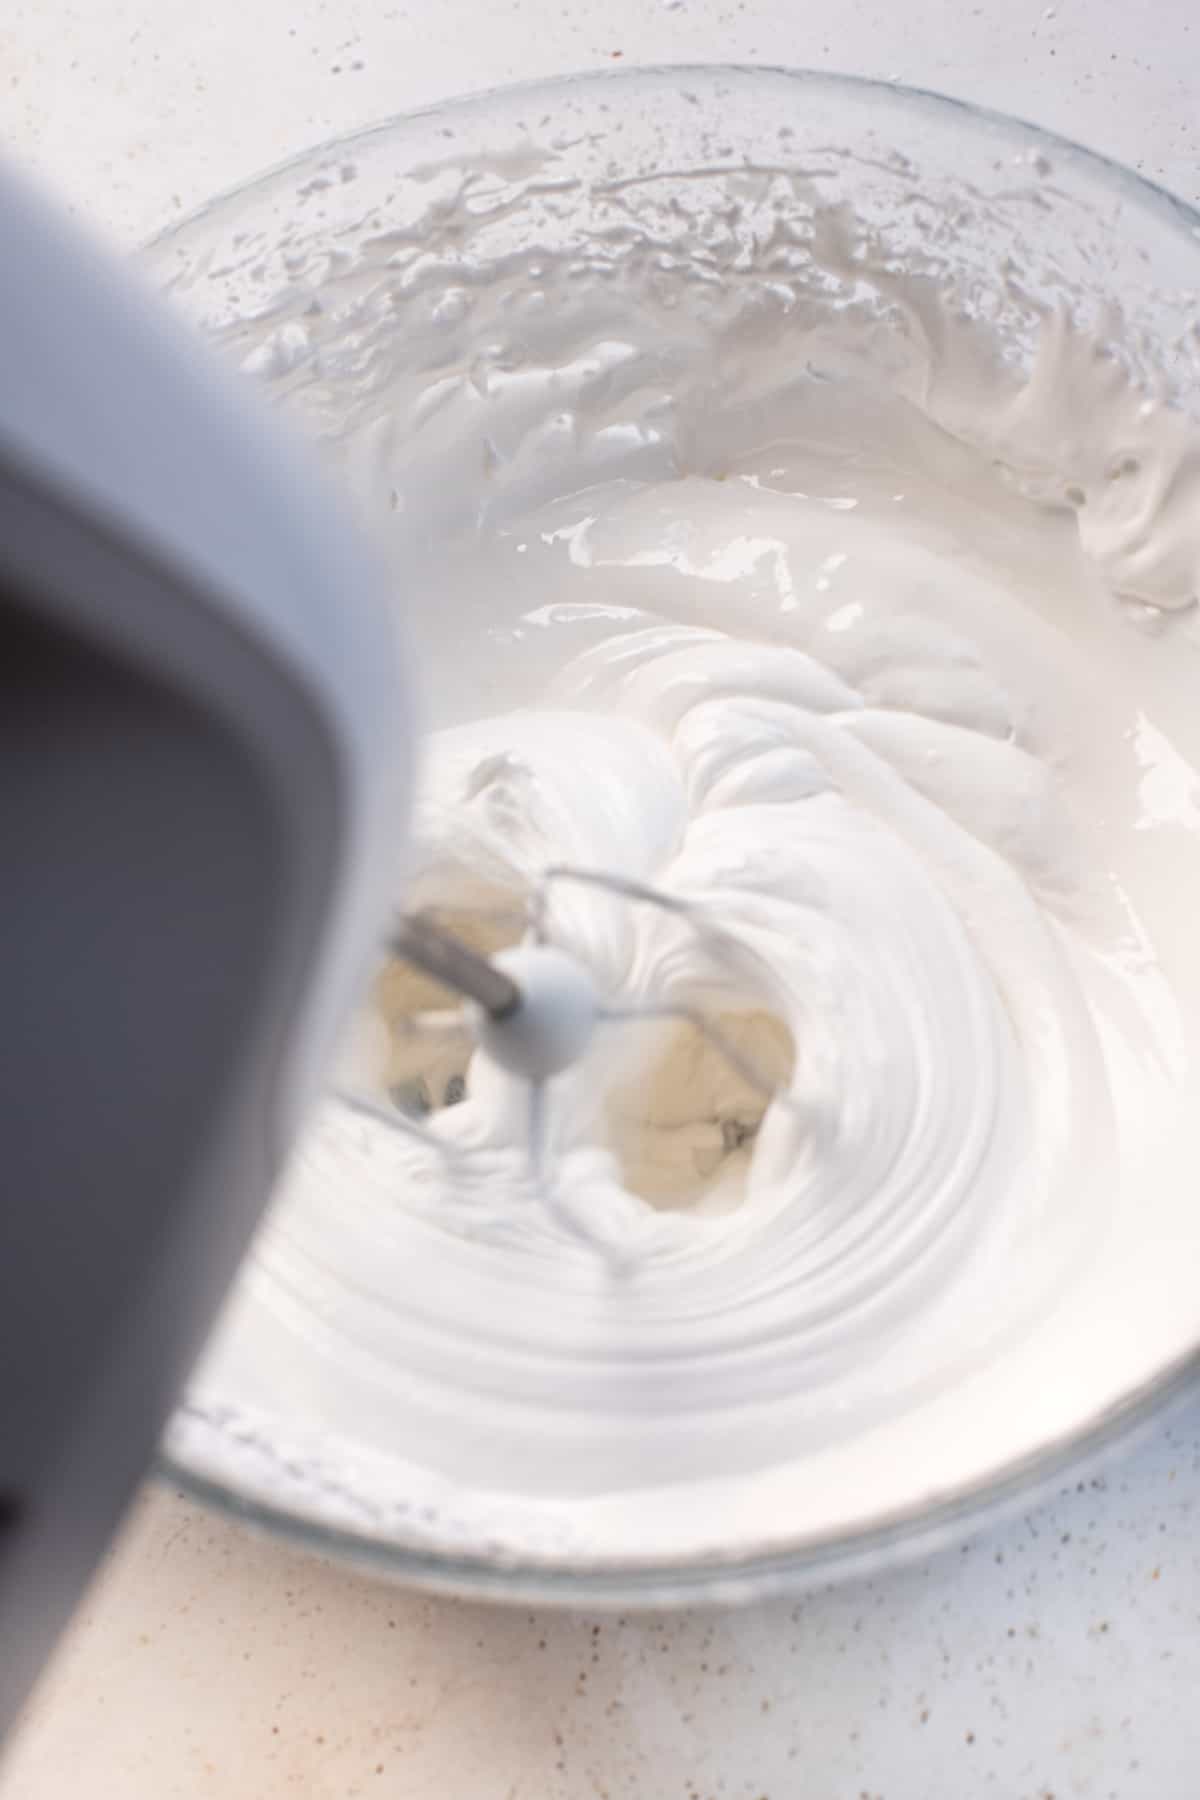 blending frosting in a bowl